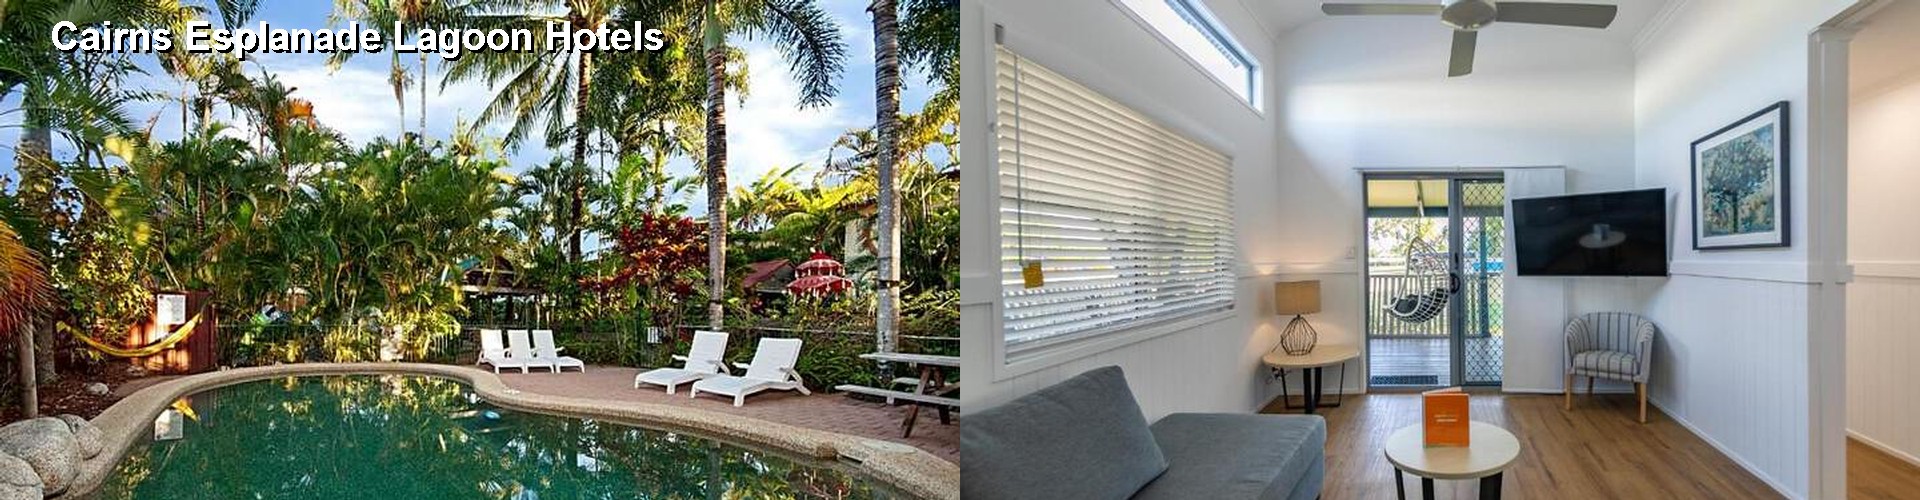 5 Best Hotels near Cairns Esplanade Lagoon